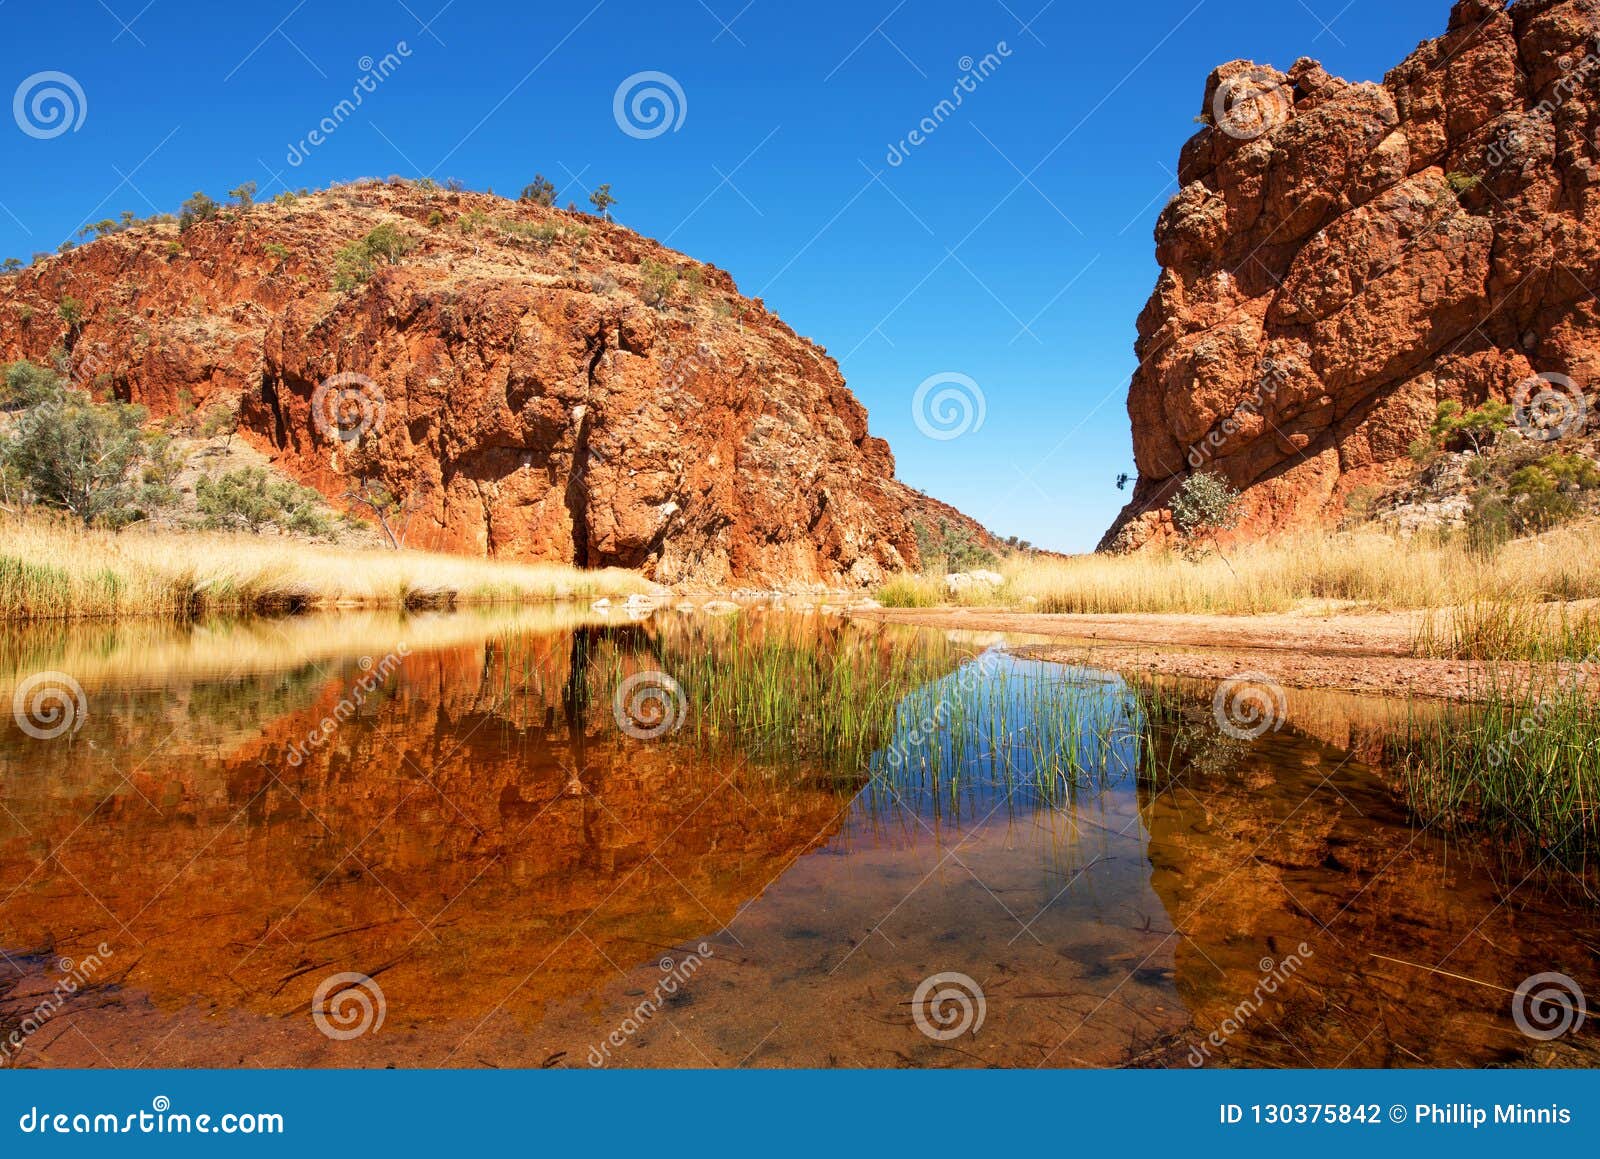 glen helen gorge, northern territory, australia